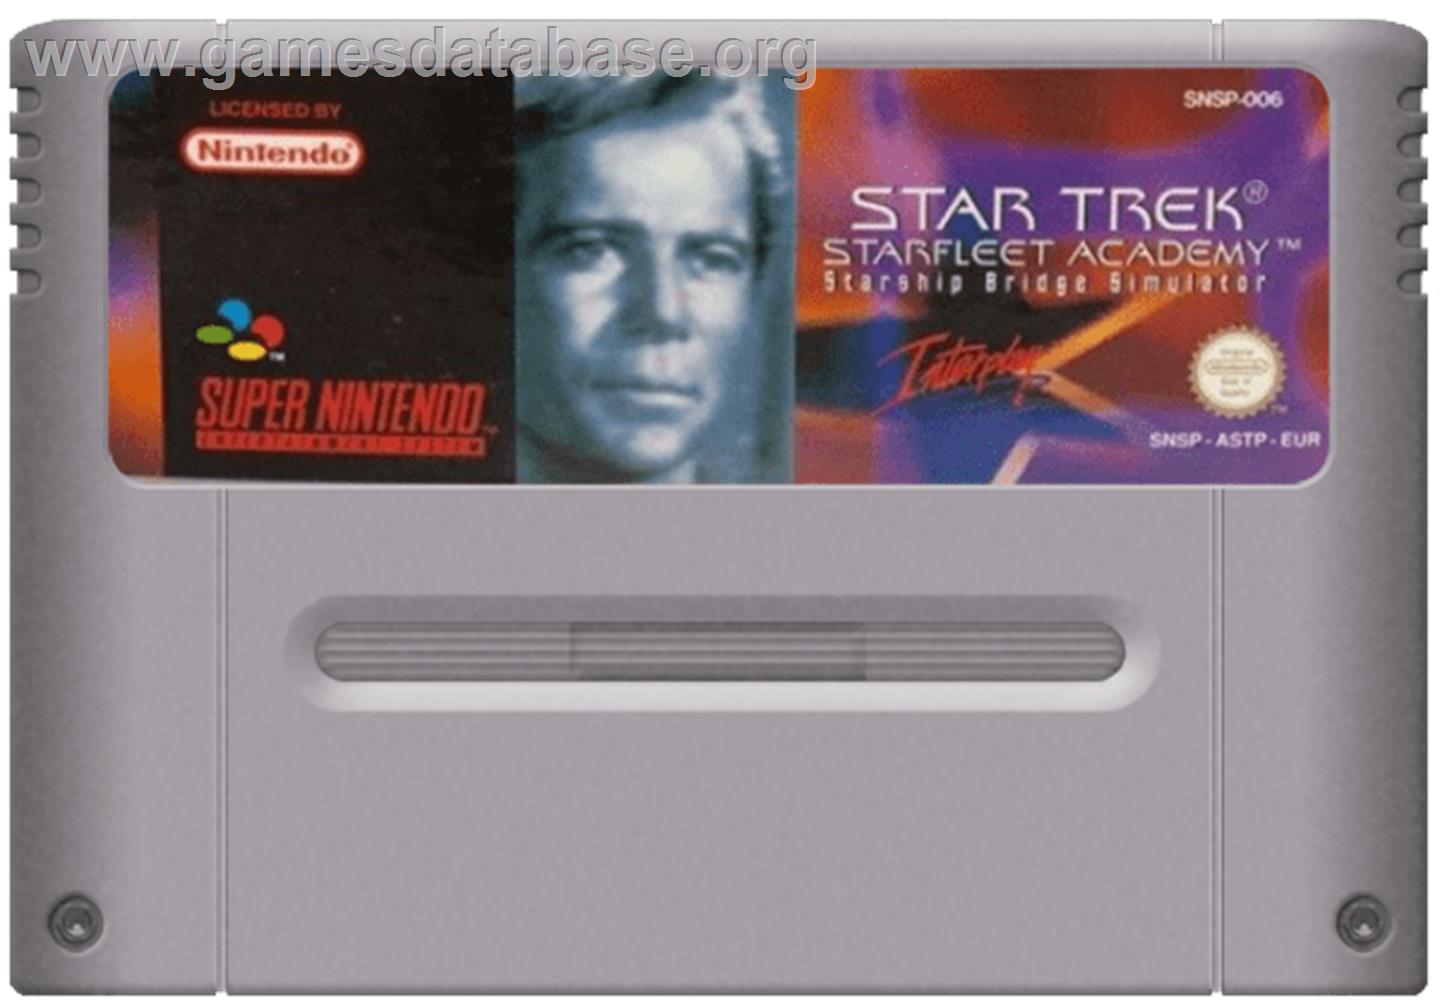 Star Trek: Starfleet Academy - Starship Bridge Simulator - Nintendo SNES - Artwork - Cartridge